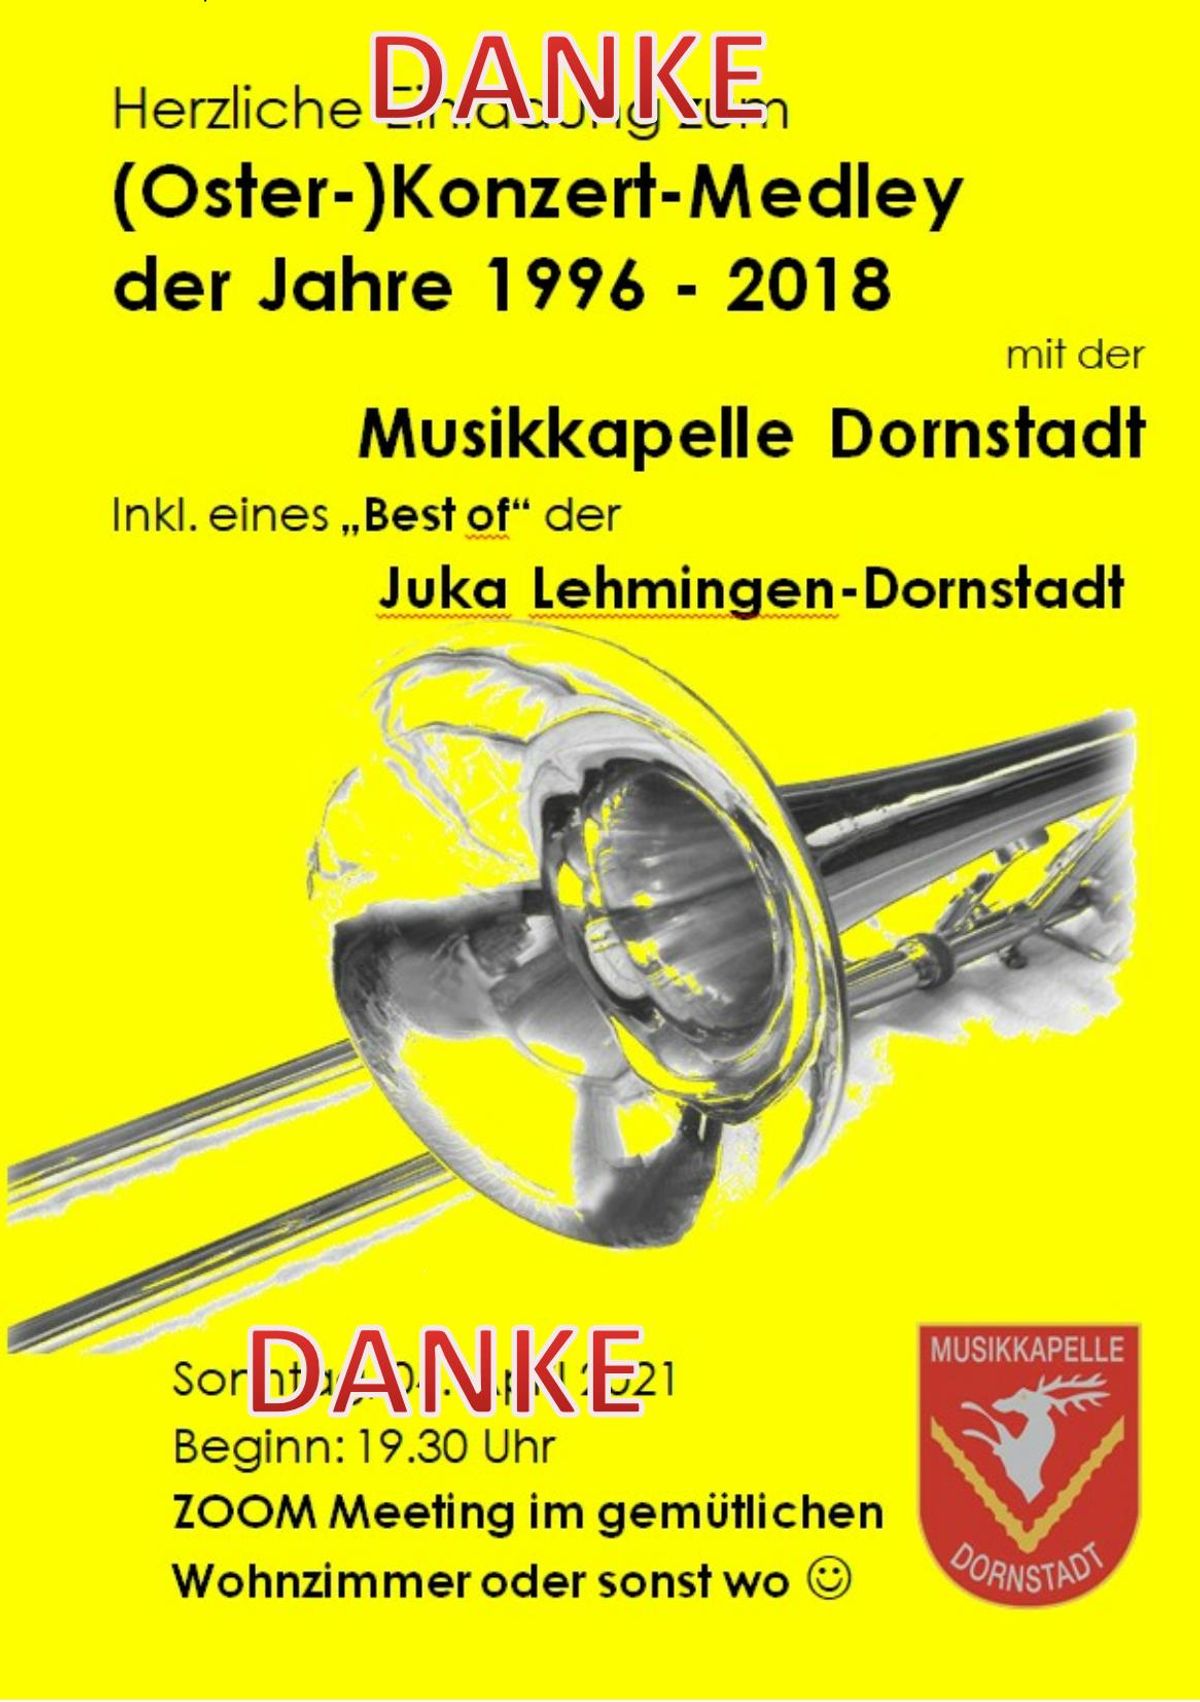 (c) Musikkapelle Dornstadt - Osterkonzert 2021 DANKE